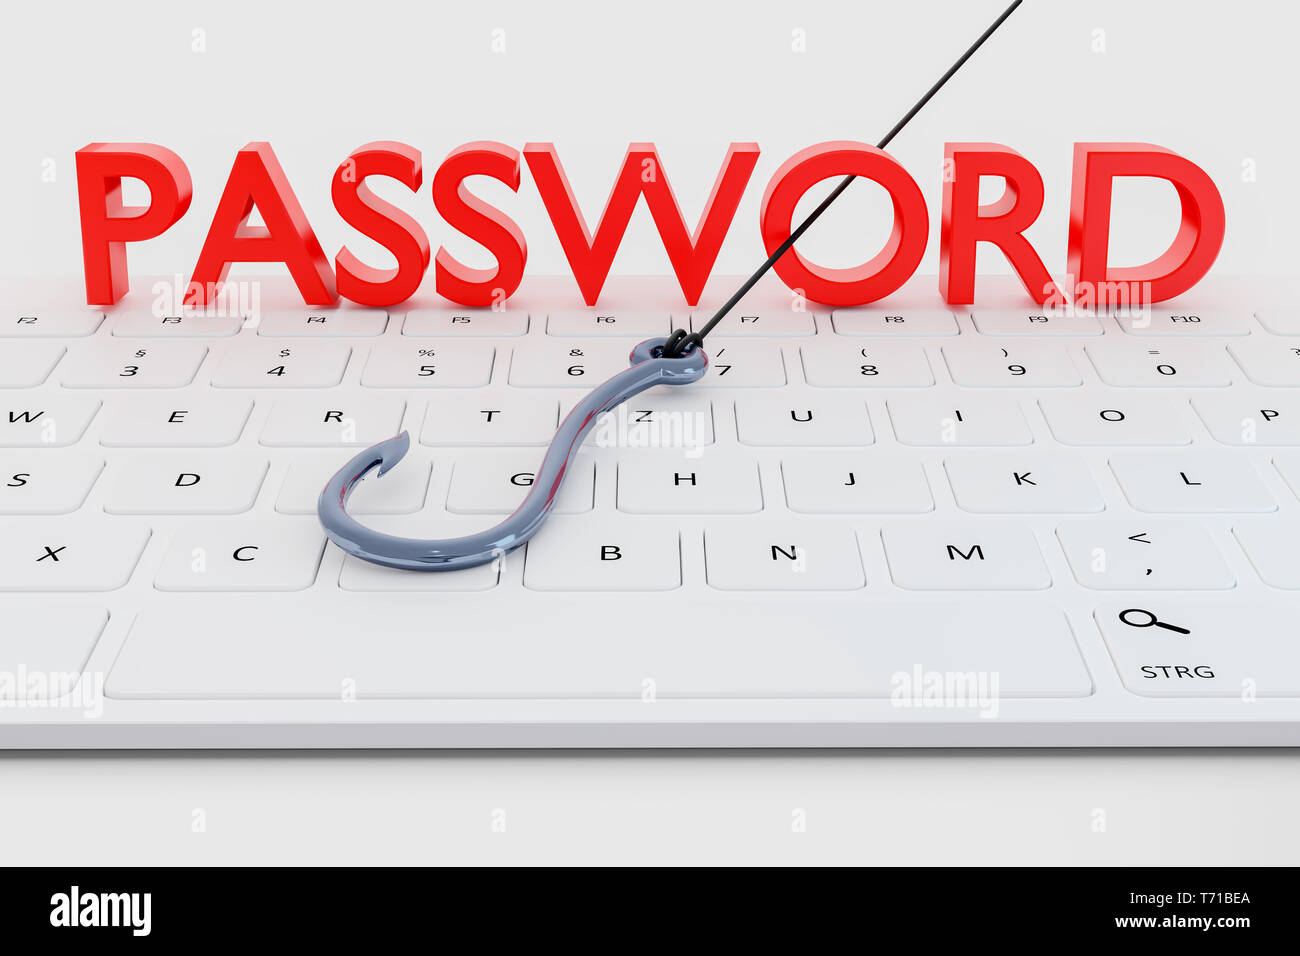 Phishing Passwort Daten mit Tastatur und haken Symbol Stockfotografie -  Alamy